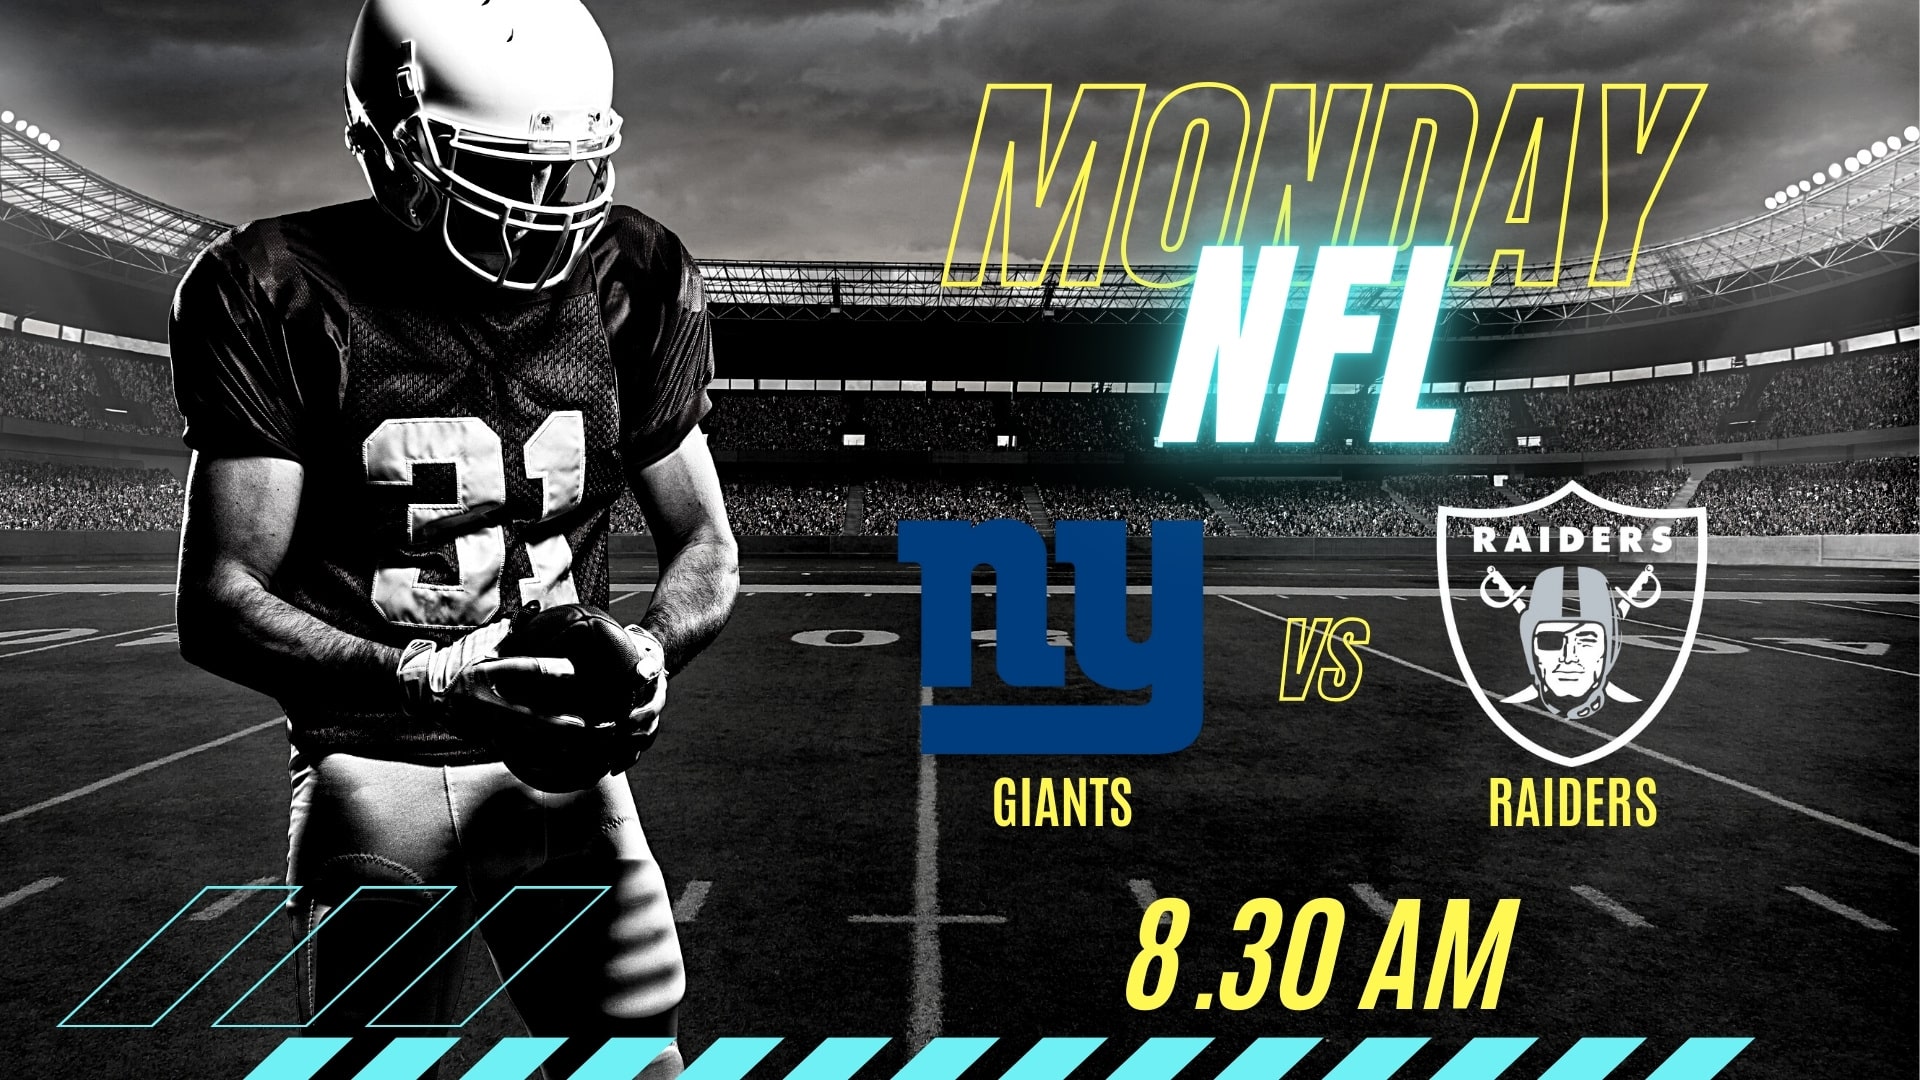 Poster of NFL match between The Giants vs The Raiders in the RGs Beer Garden